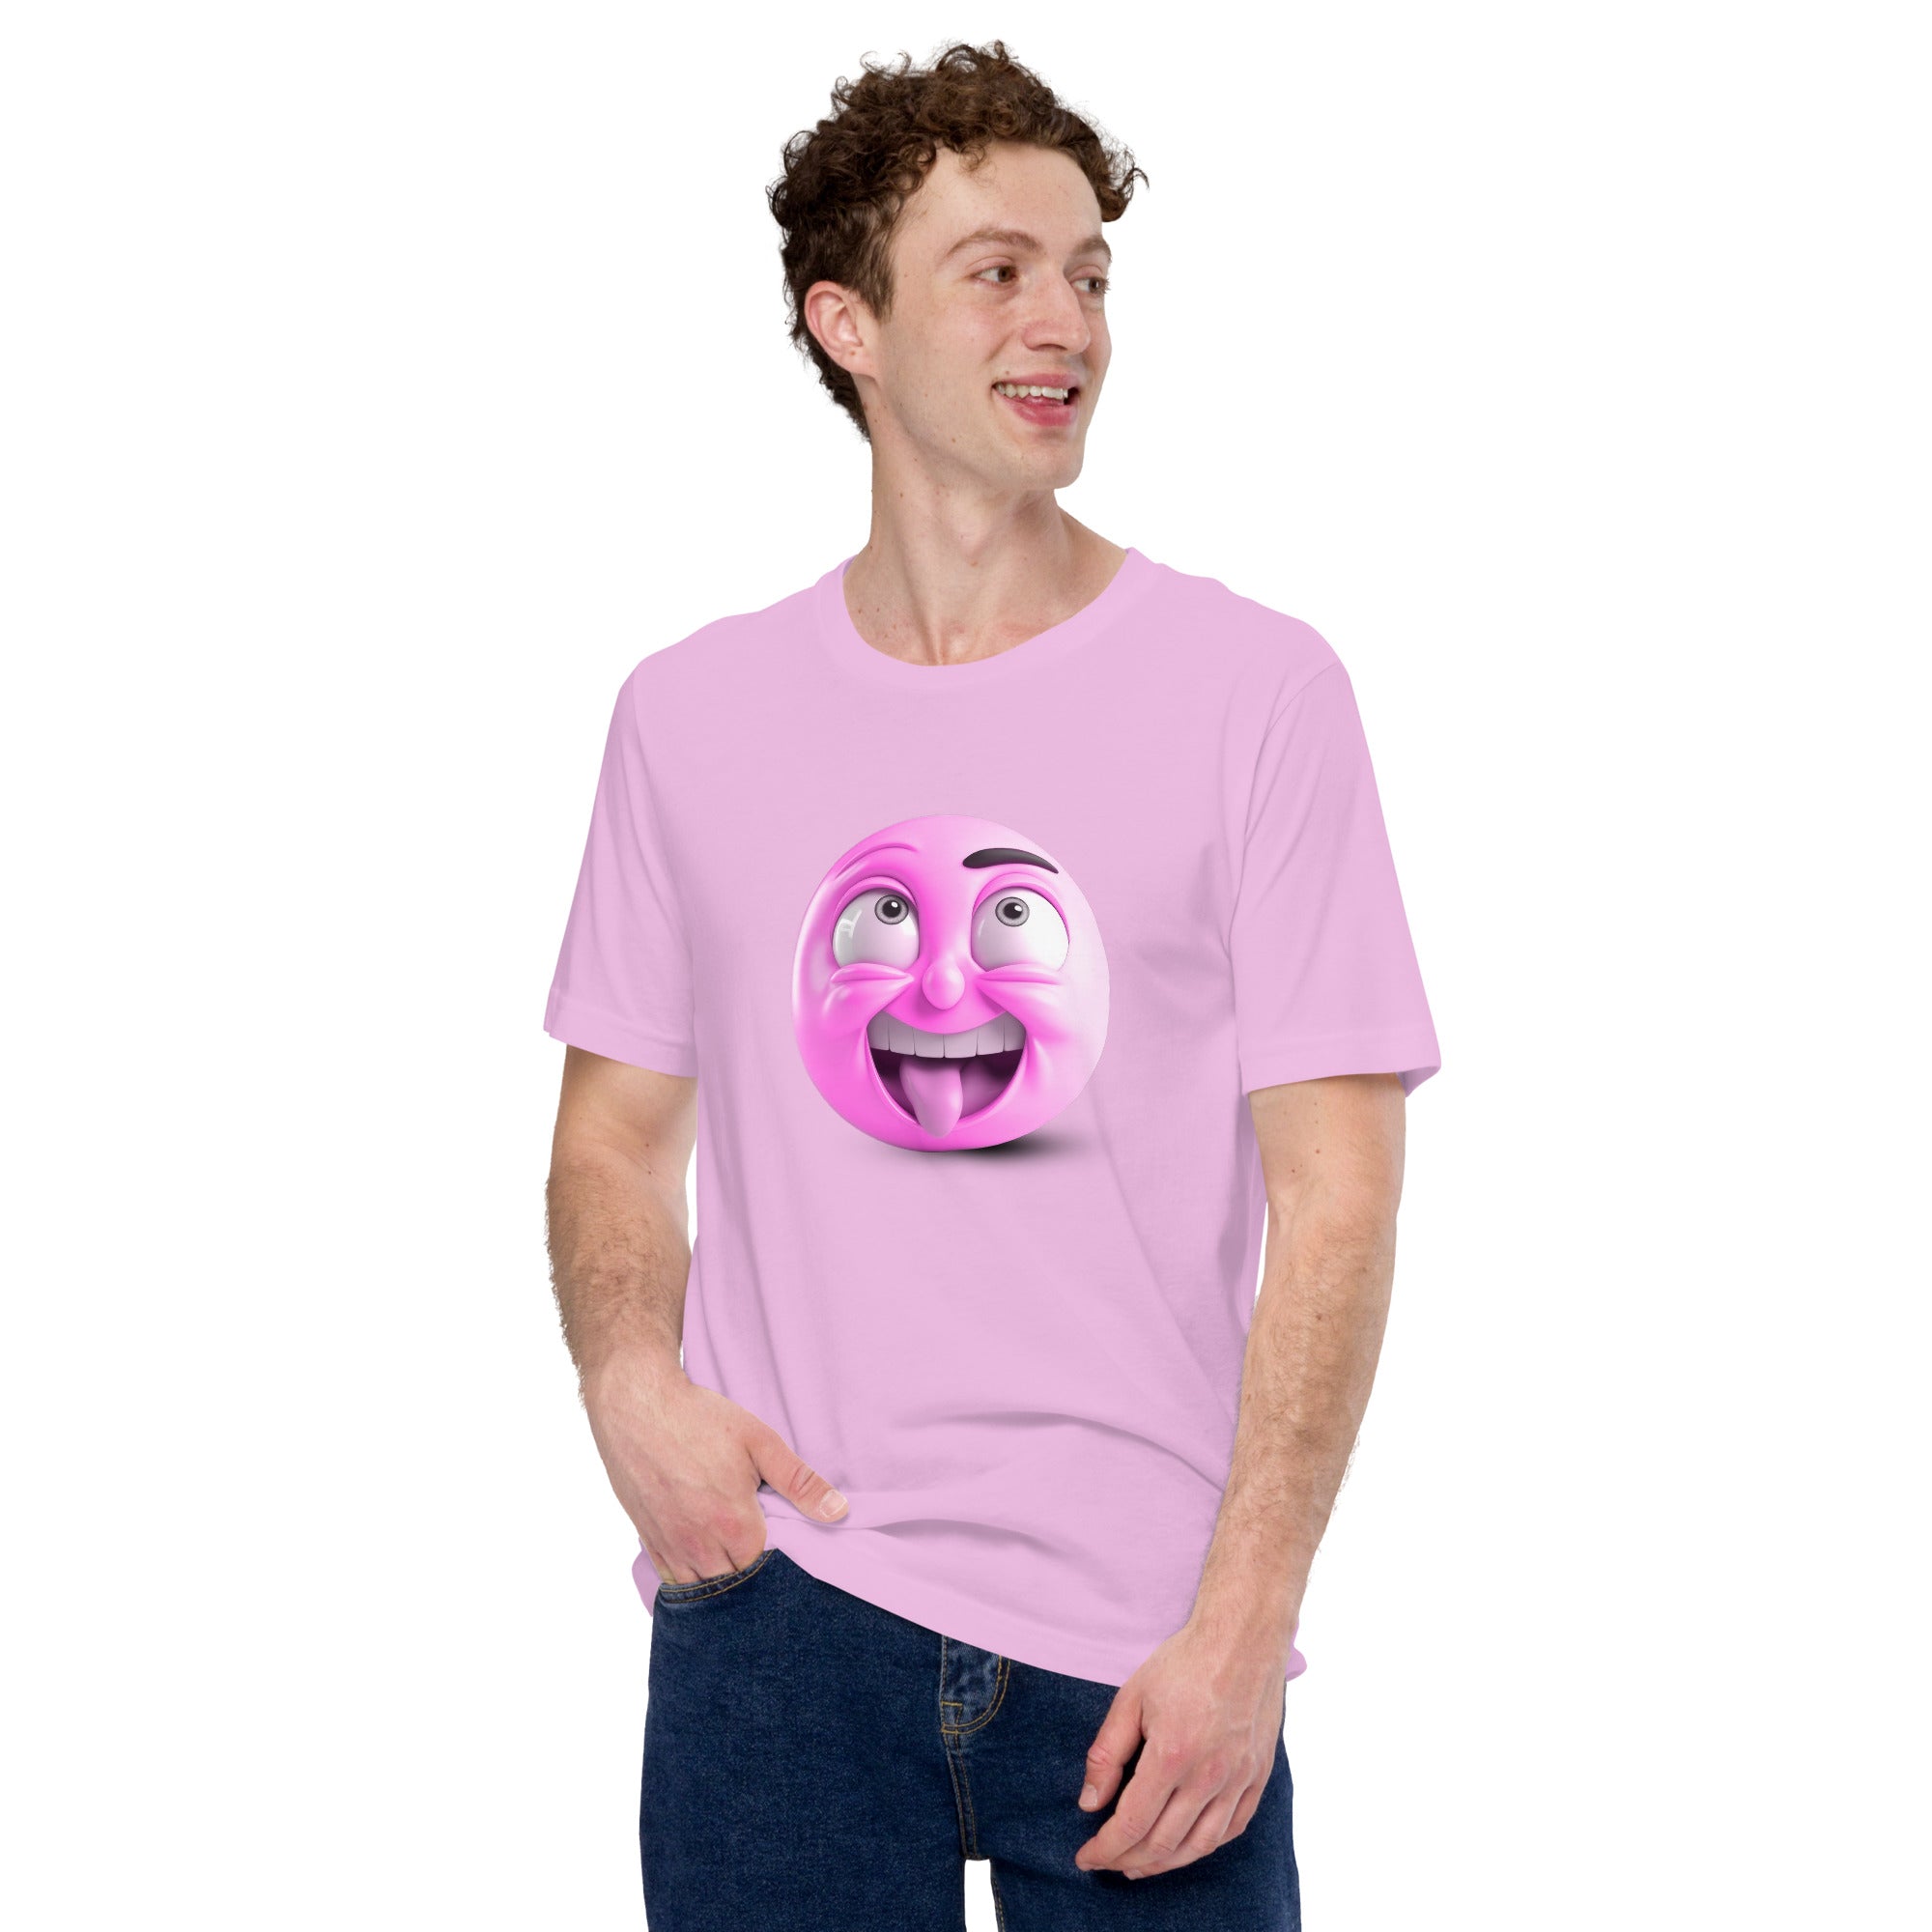 Winking Emoji T-Shirt for Men and Women